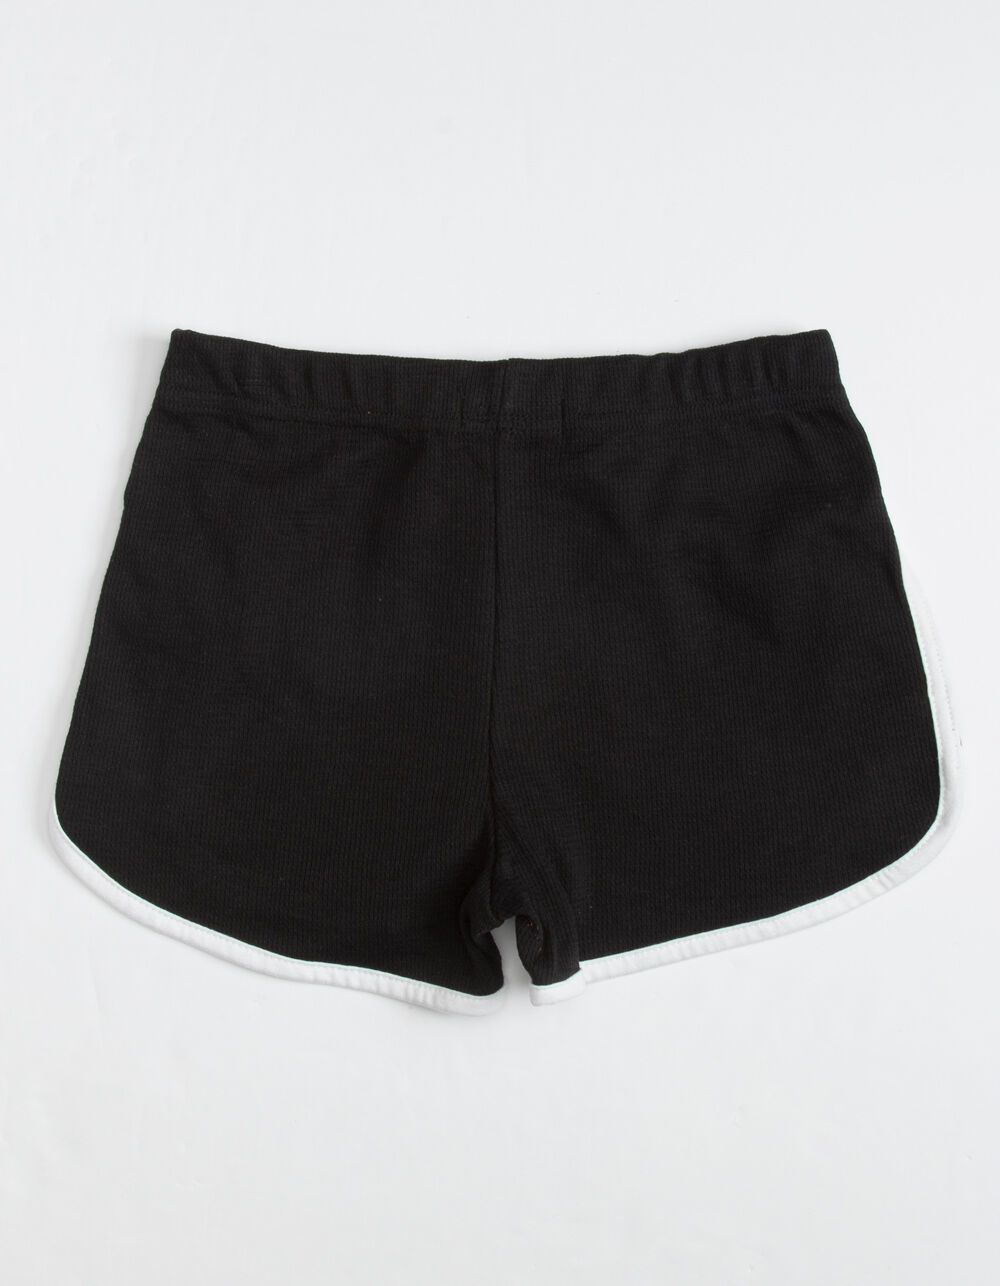 FULL CIRCLE TRENDS Contrast Piping Girls Black Shorts - BLACK | Tillys